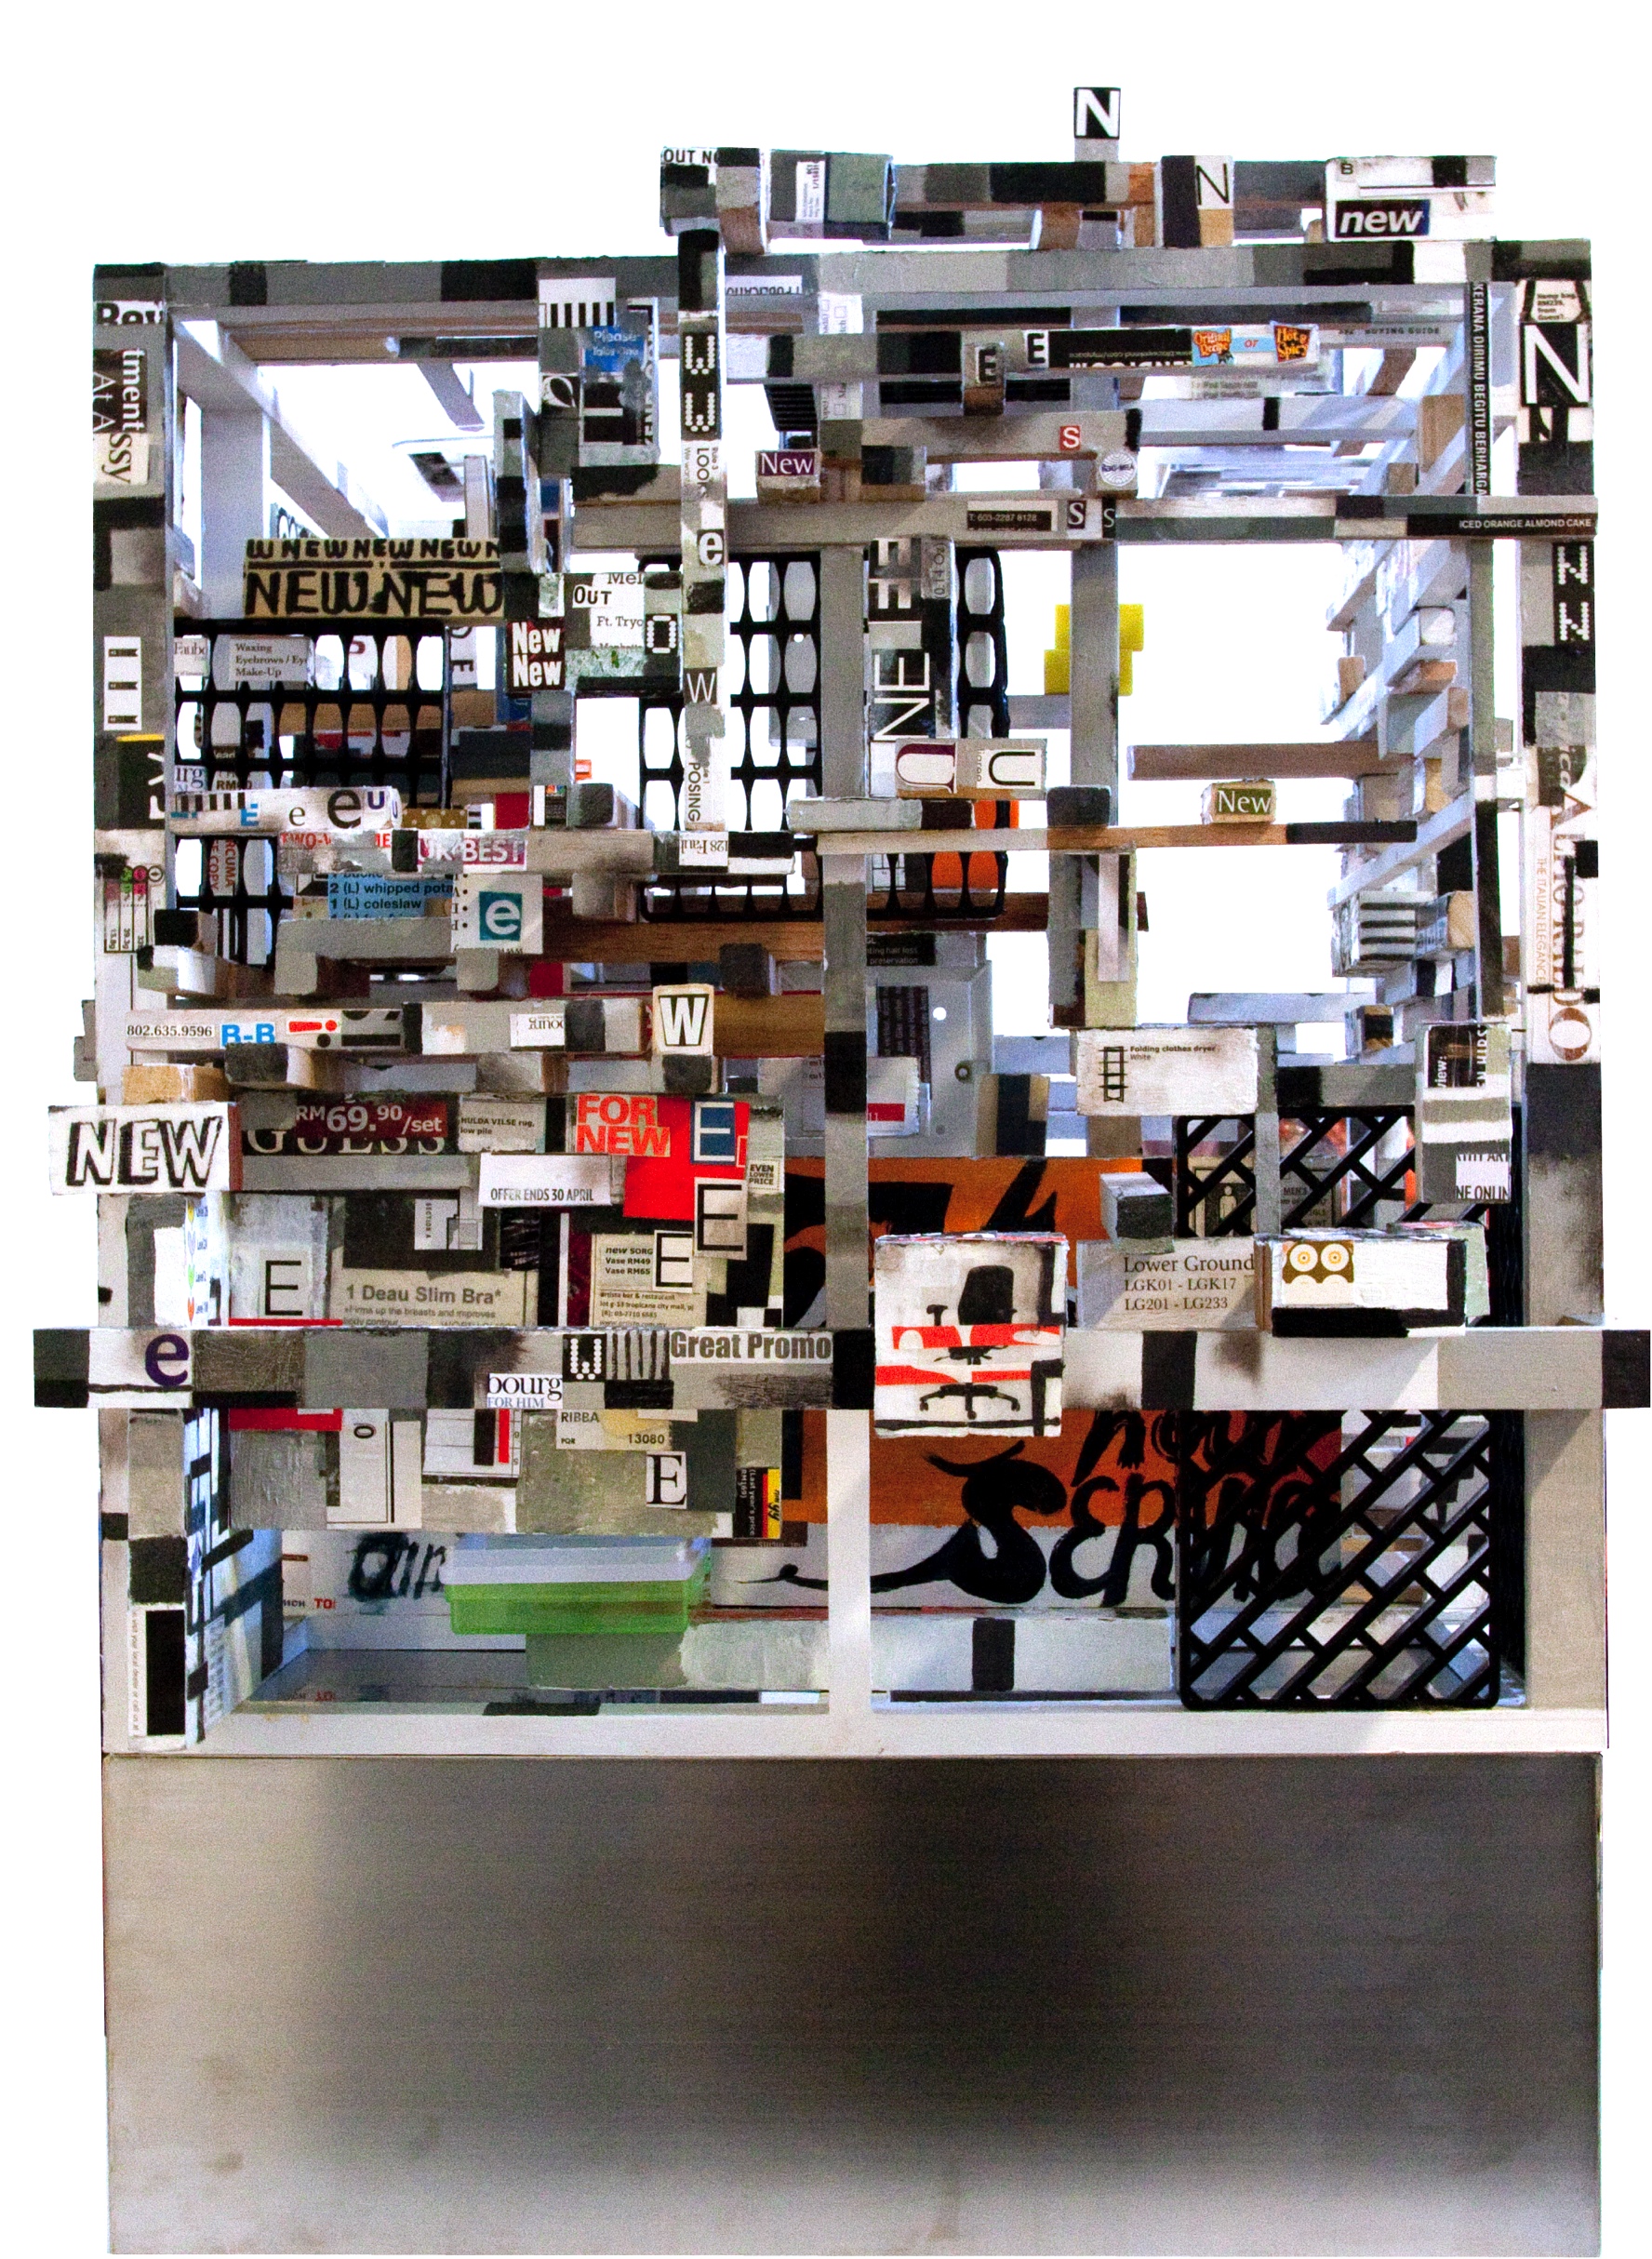 choy chun wei - shopping ghettos, acrylic medium, oil . collage on wood on stainless steel base, 53 x 47 x 48cm, 2010